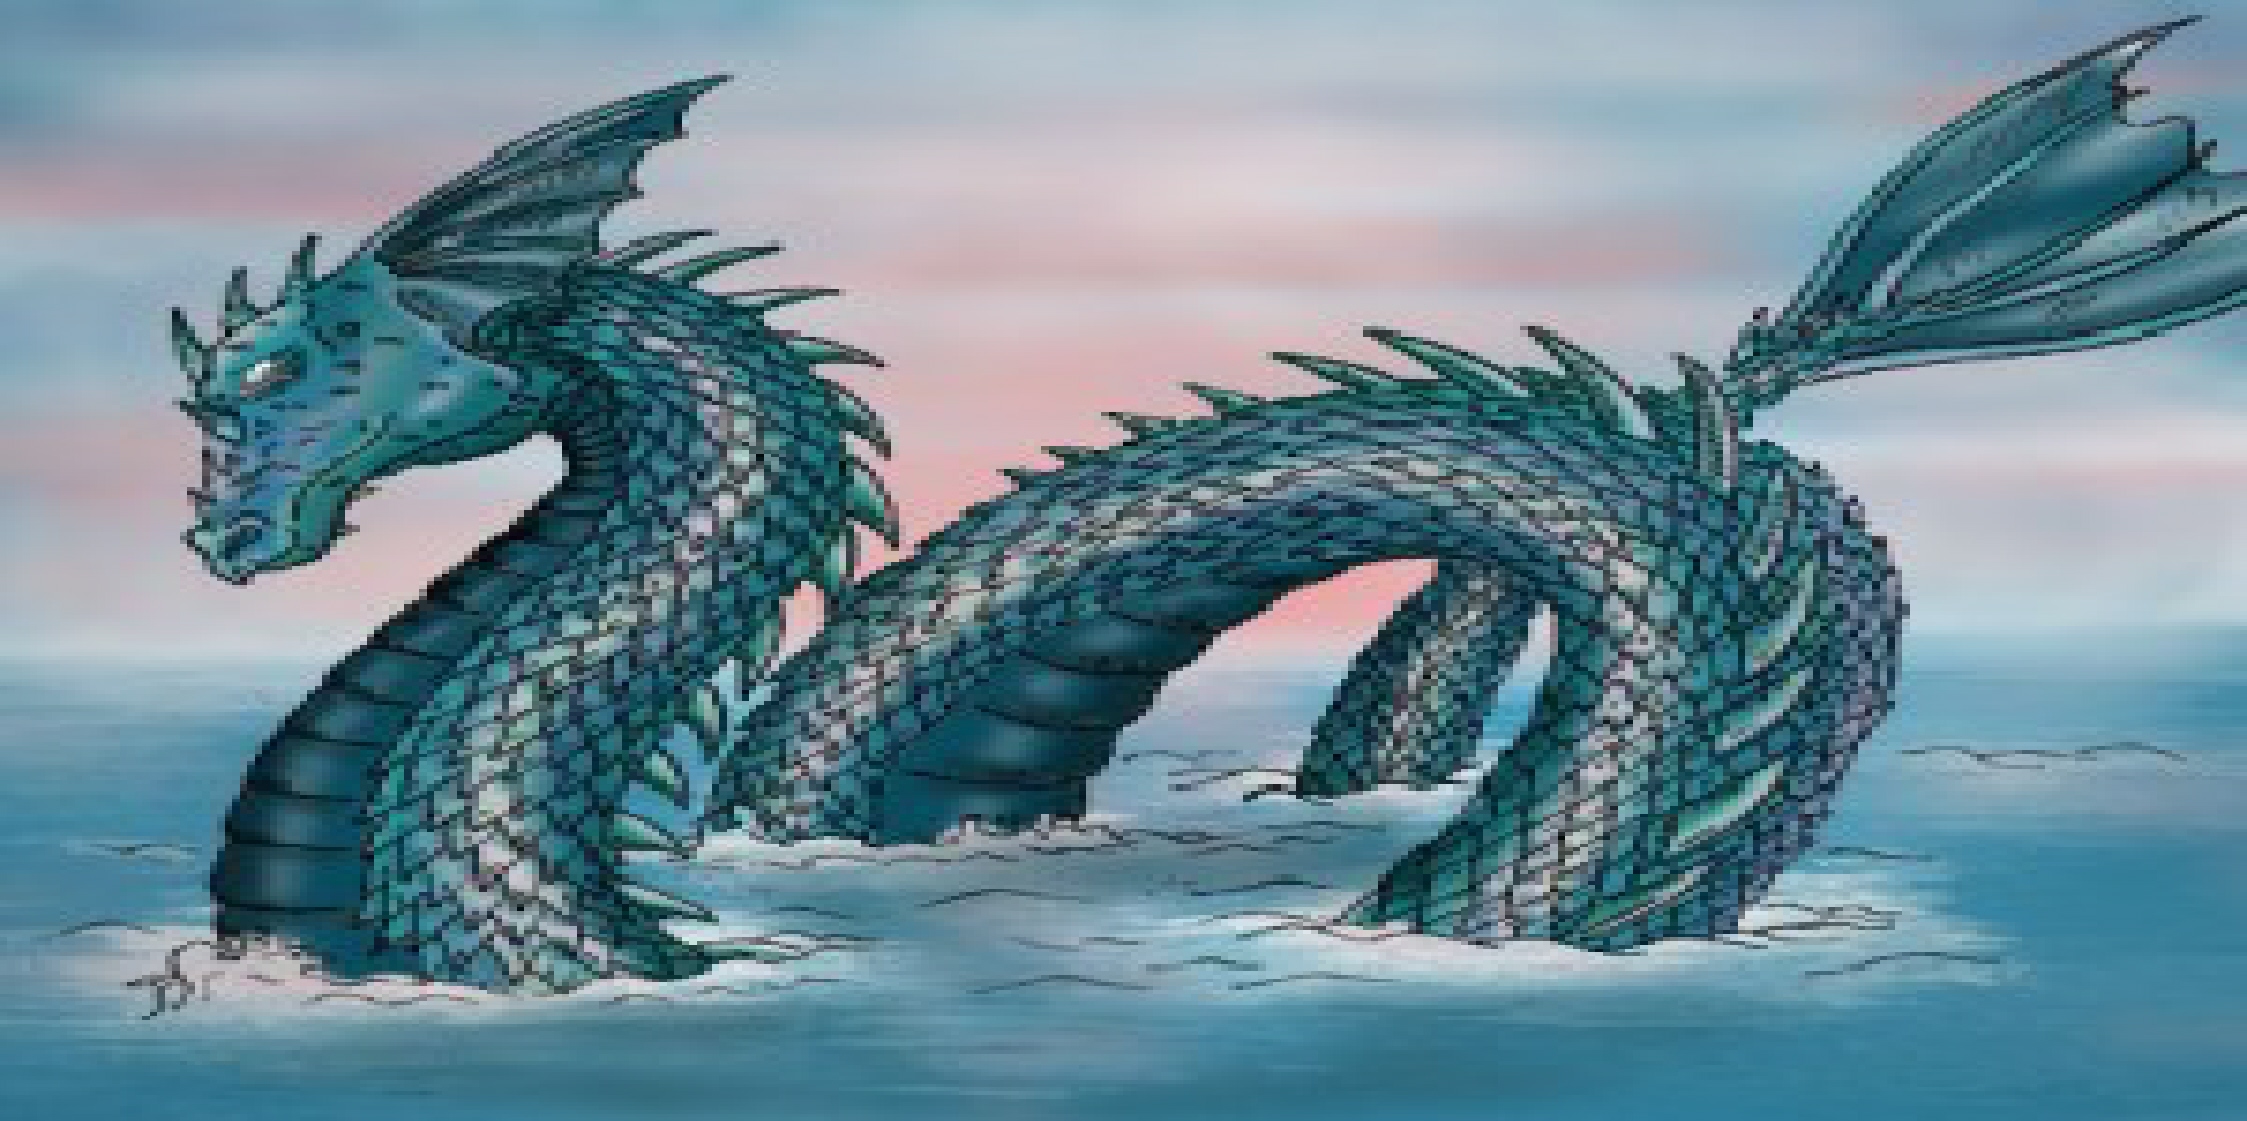 poseidons-sea-monster-1